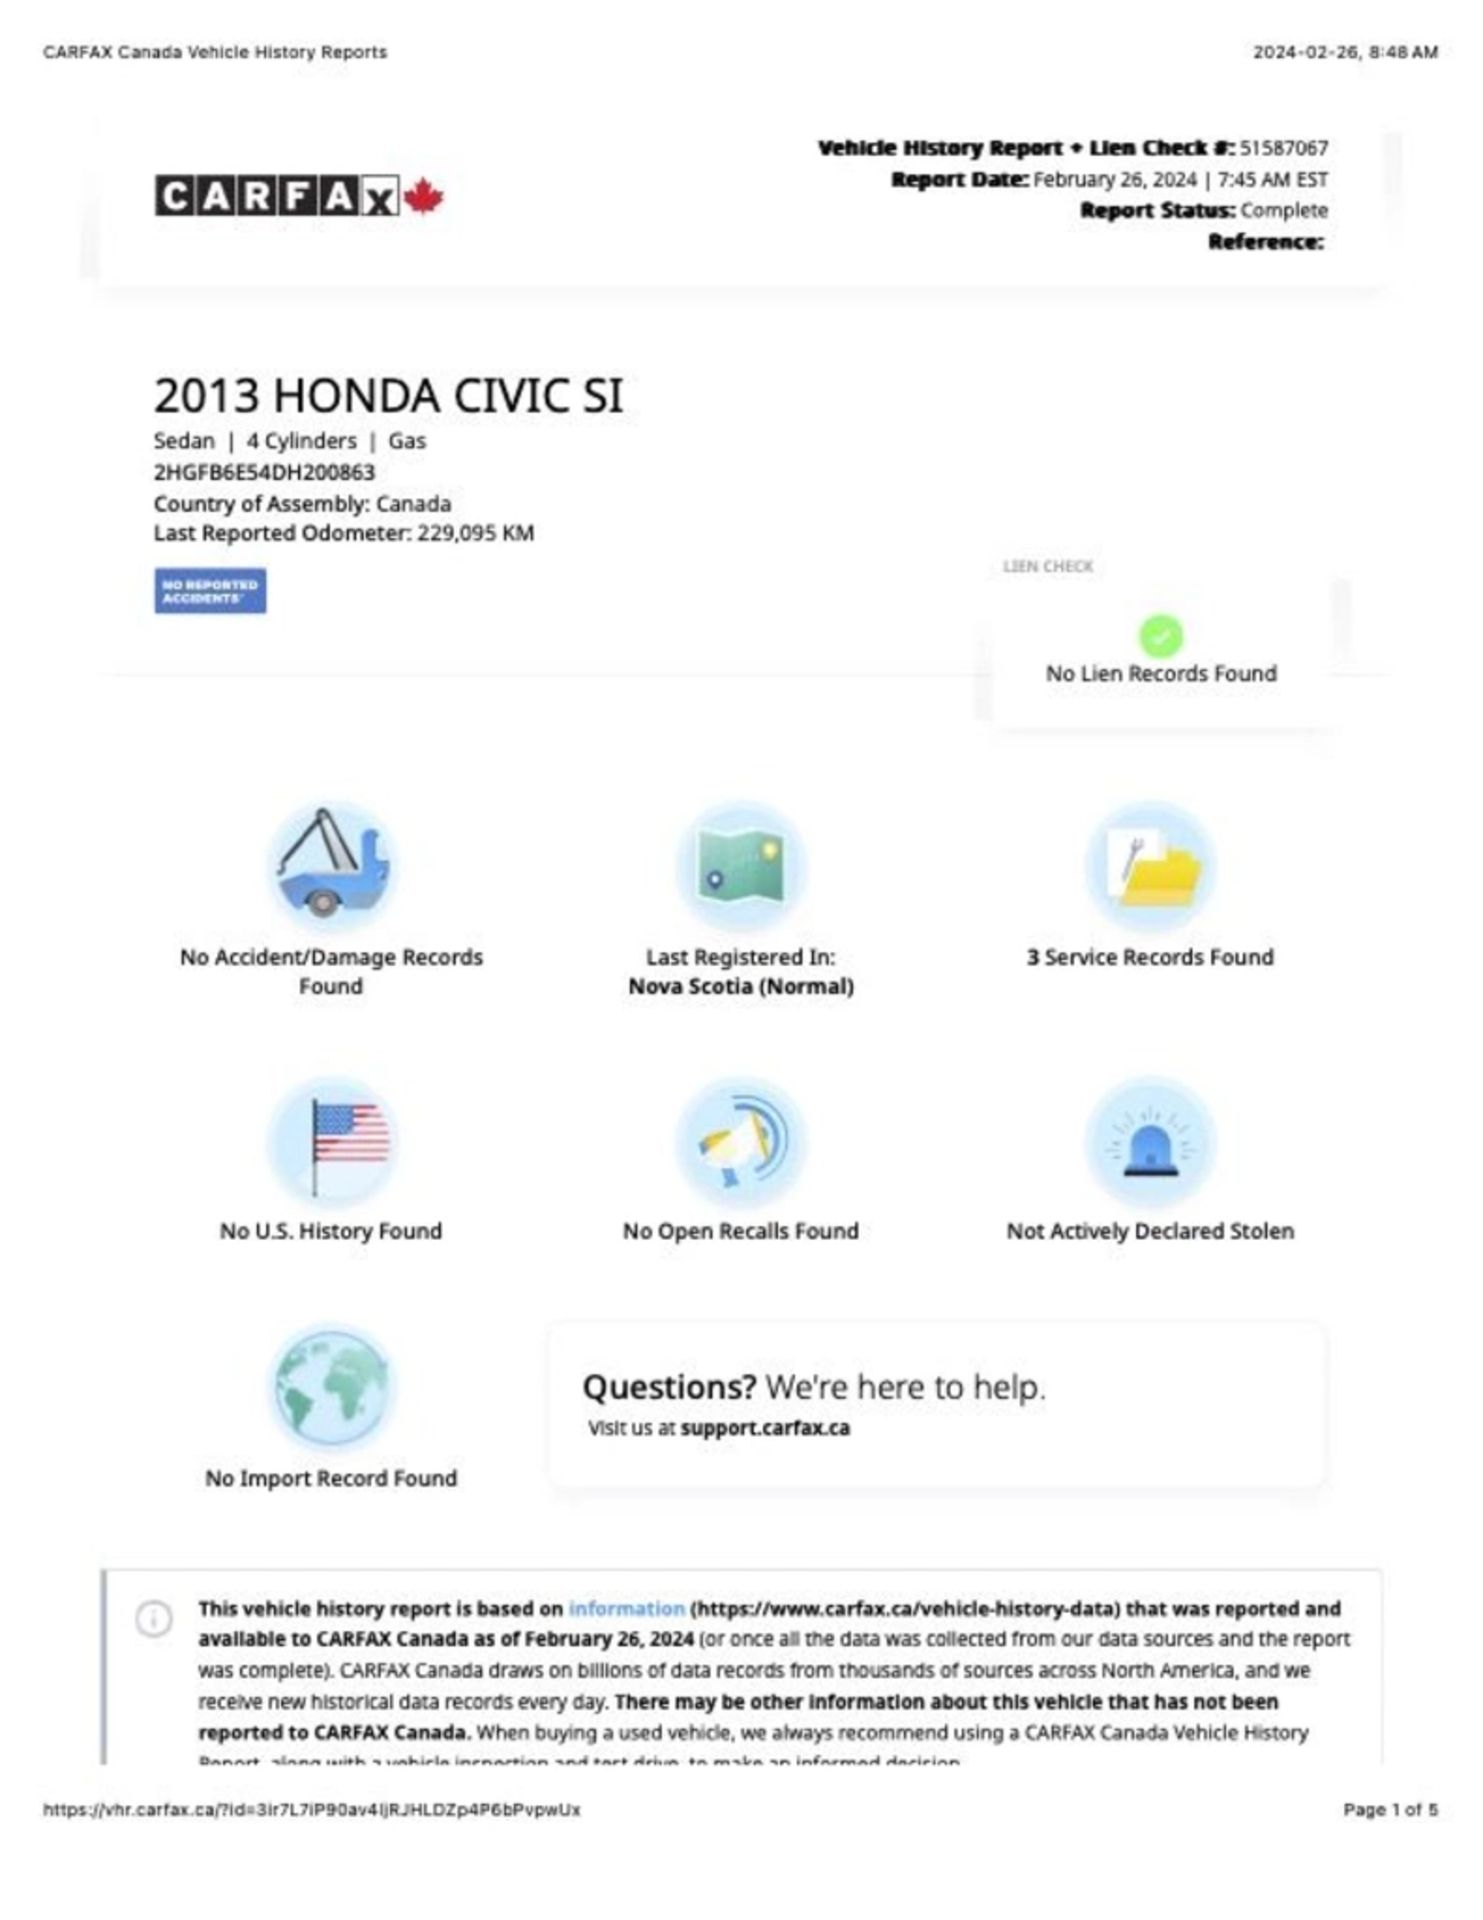 2013 HONDA CIVIC SI - Image 18 of 21